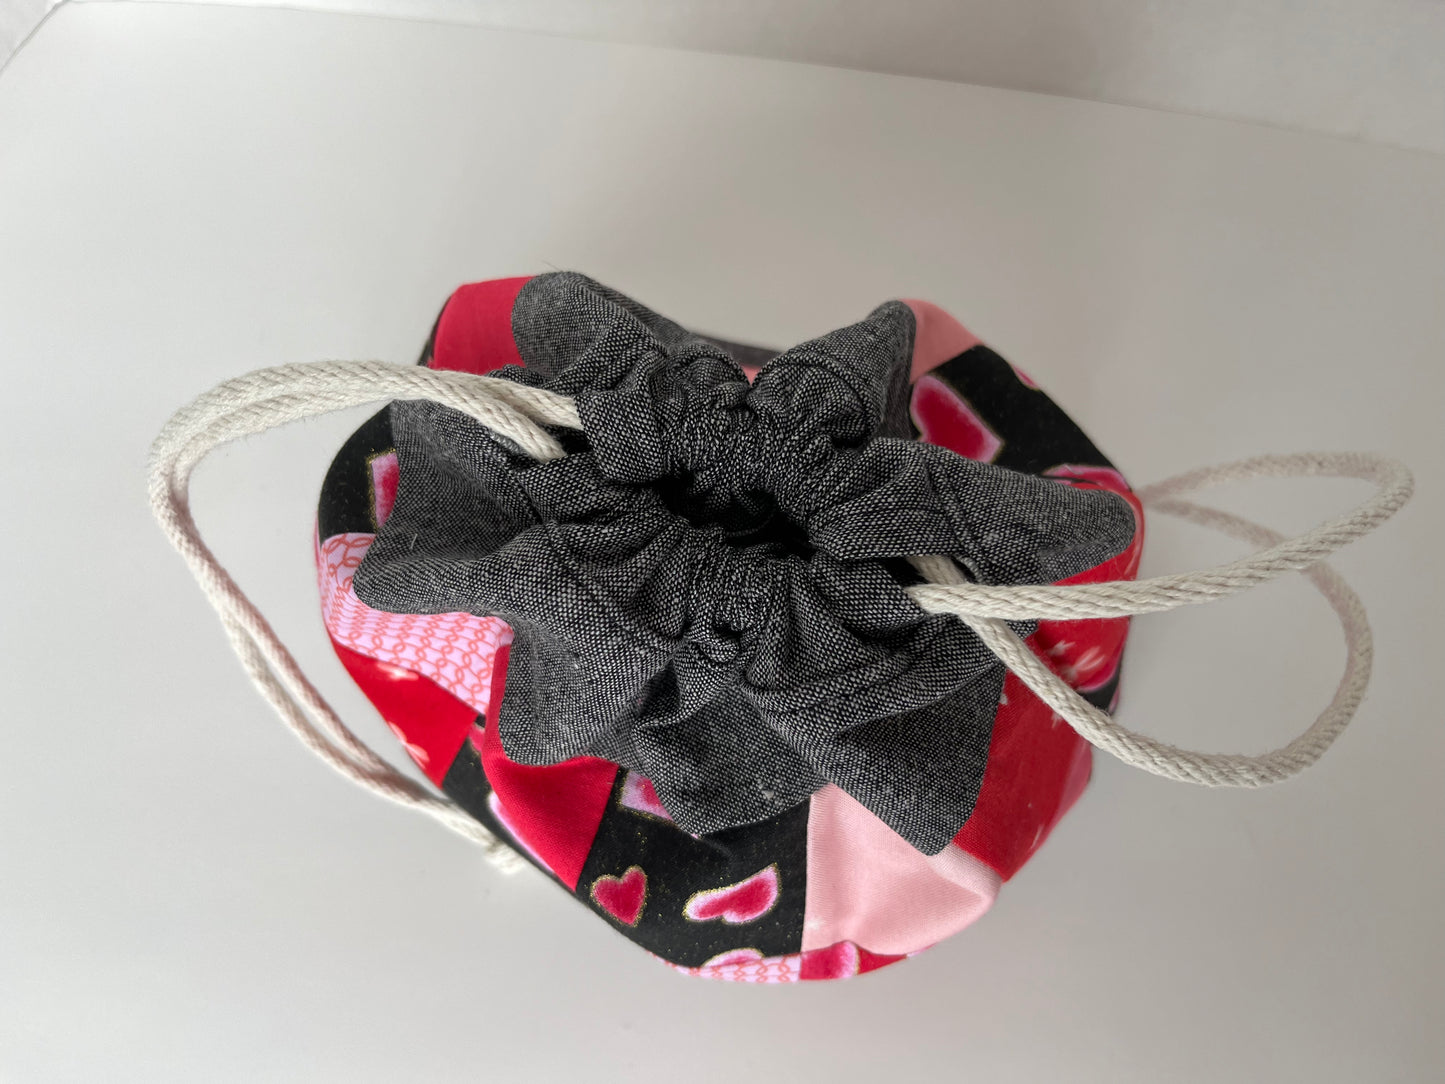 Patchwork and Linen Medium Knitting Project Bag, Valentine Themed Drawstring Bag